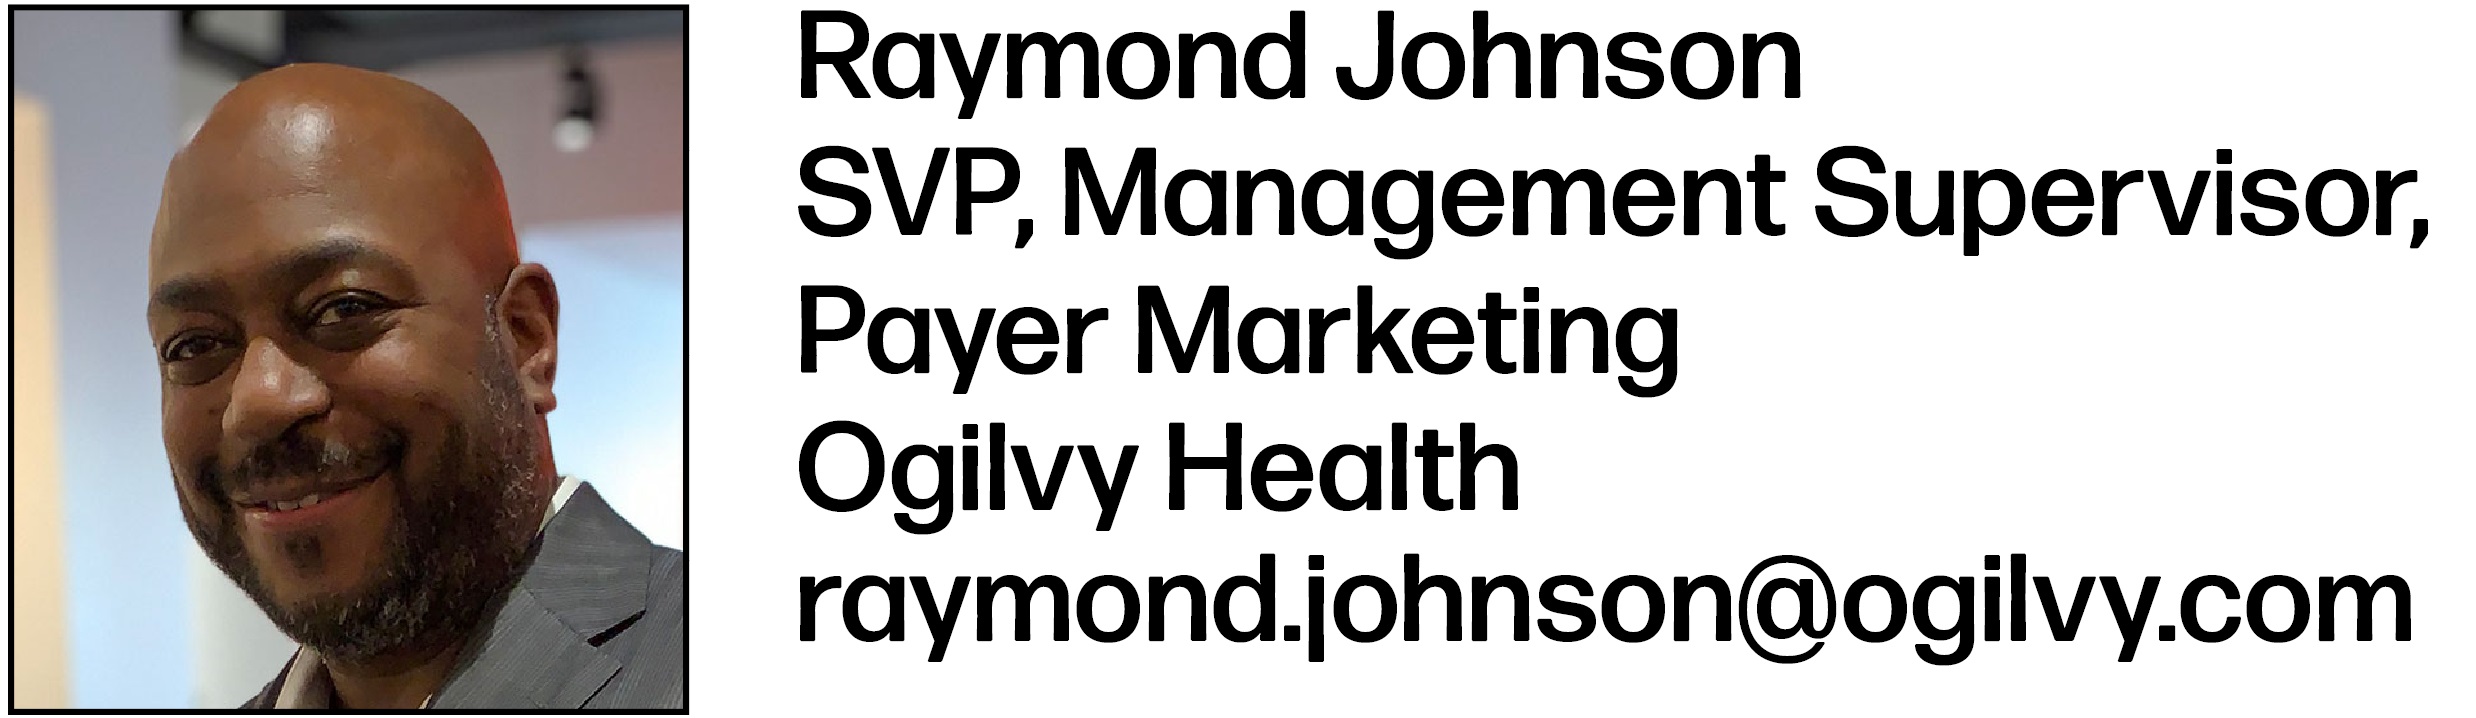 Raymond Johnson is SVP, Management Supervisor, Payer Marketing at Ogilvy Health. His email is raymond.johnson@ogilvy.com. 